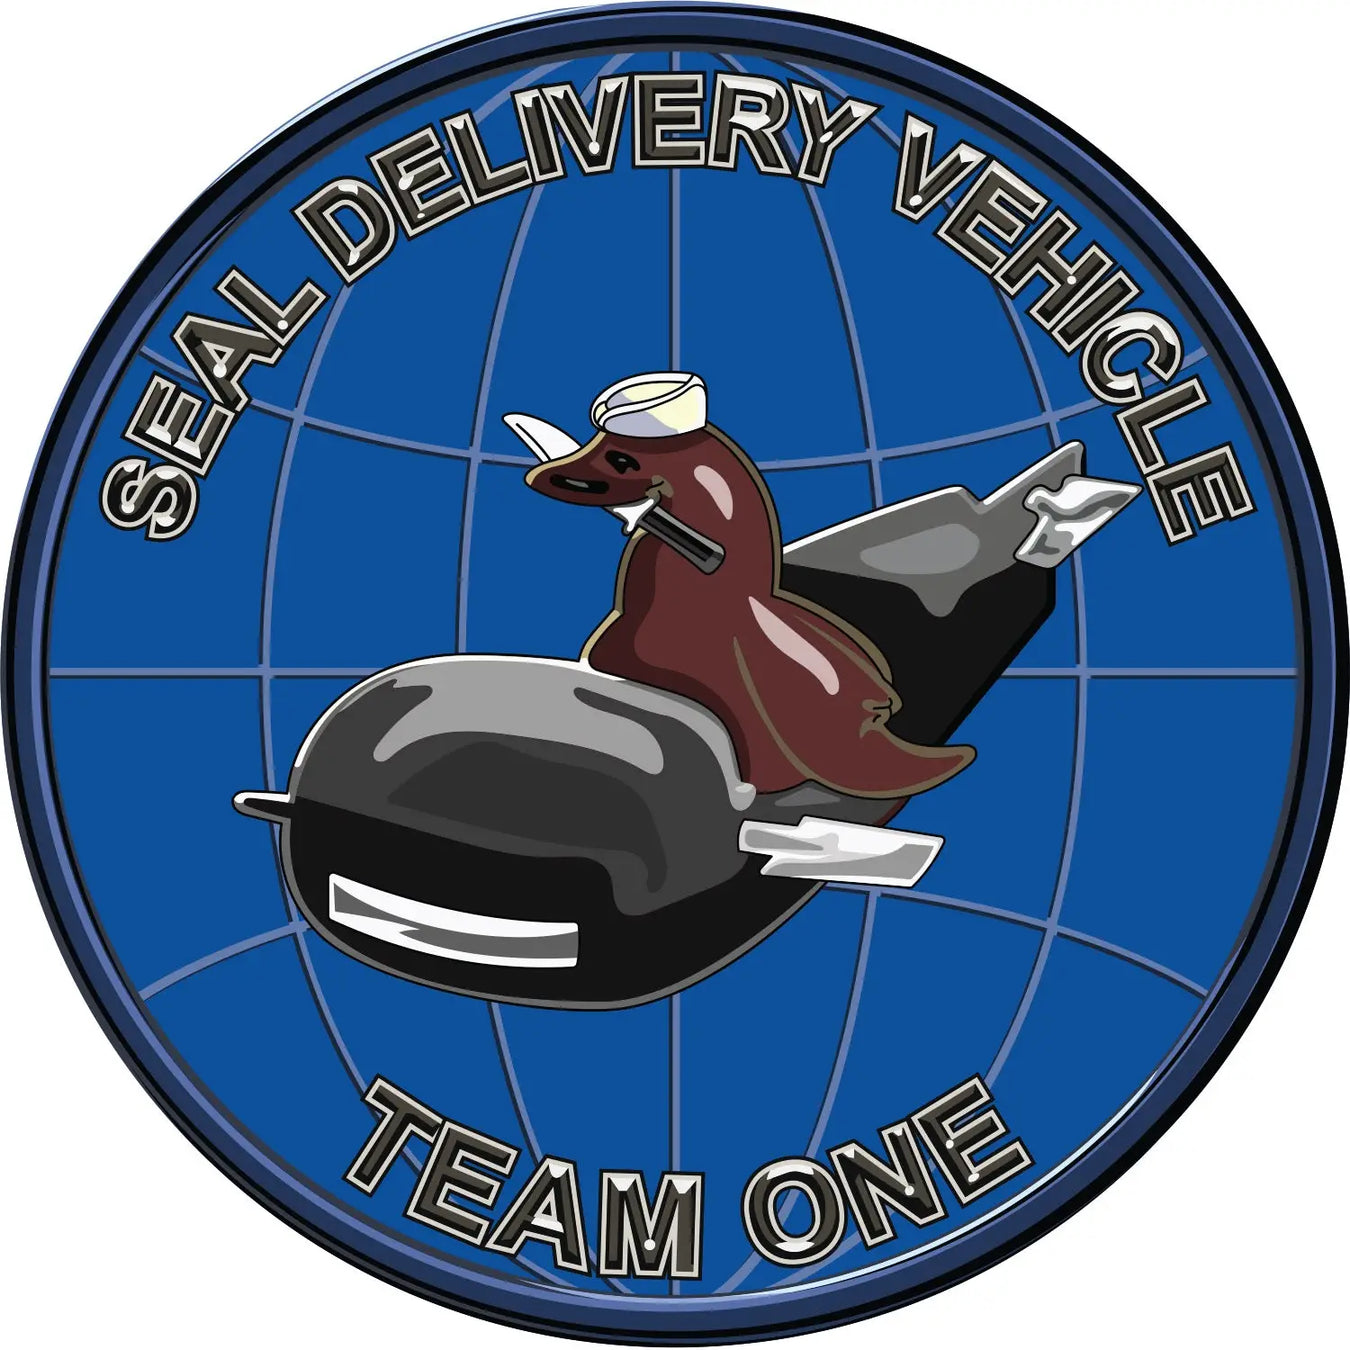 SEAL Delivery Vehicle Team 1 (SDVT-1)